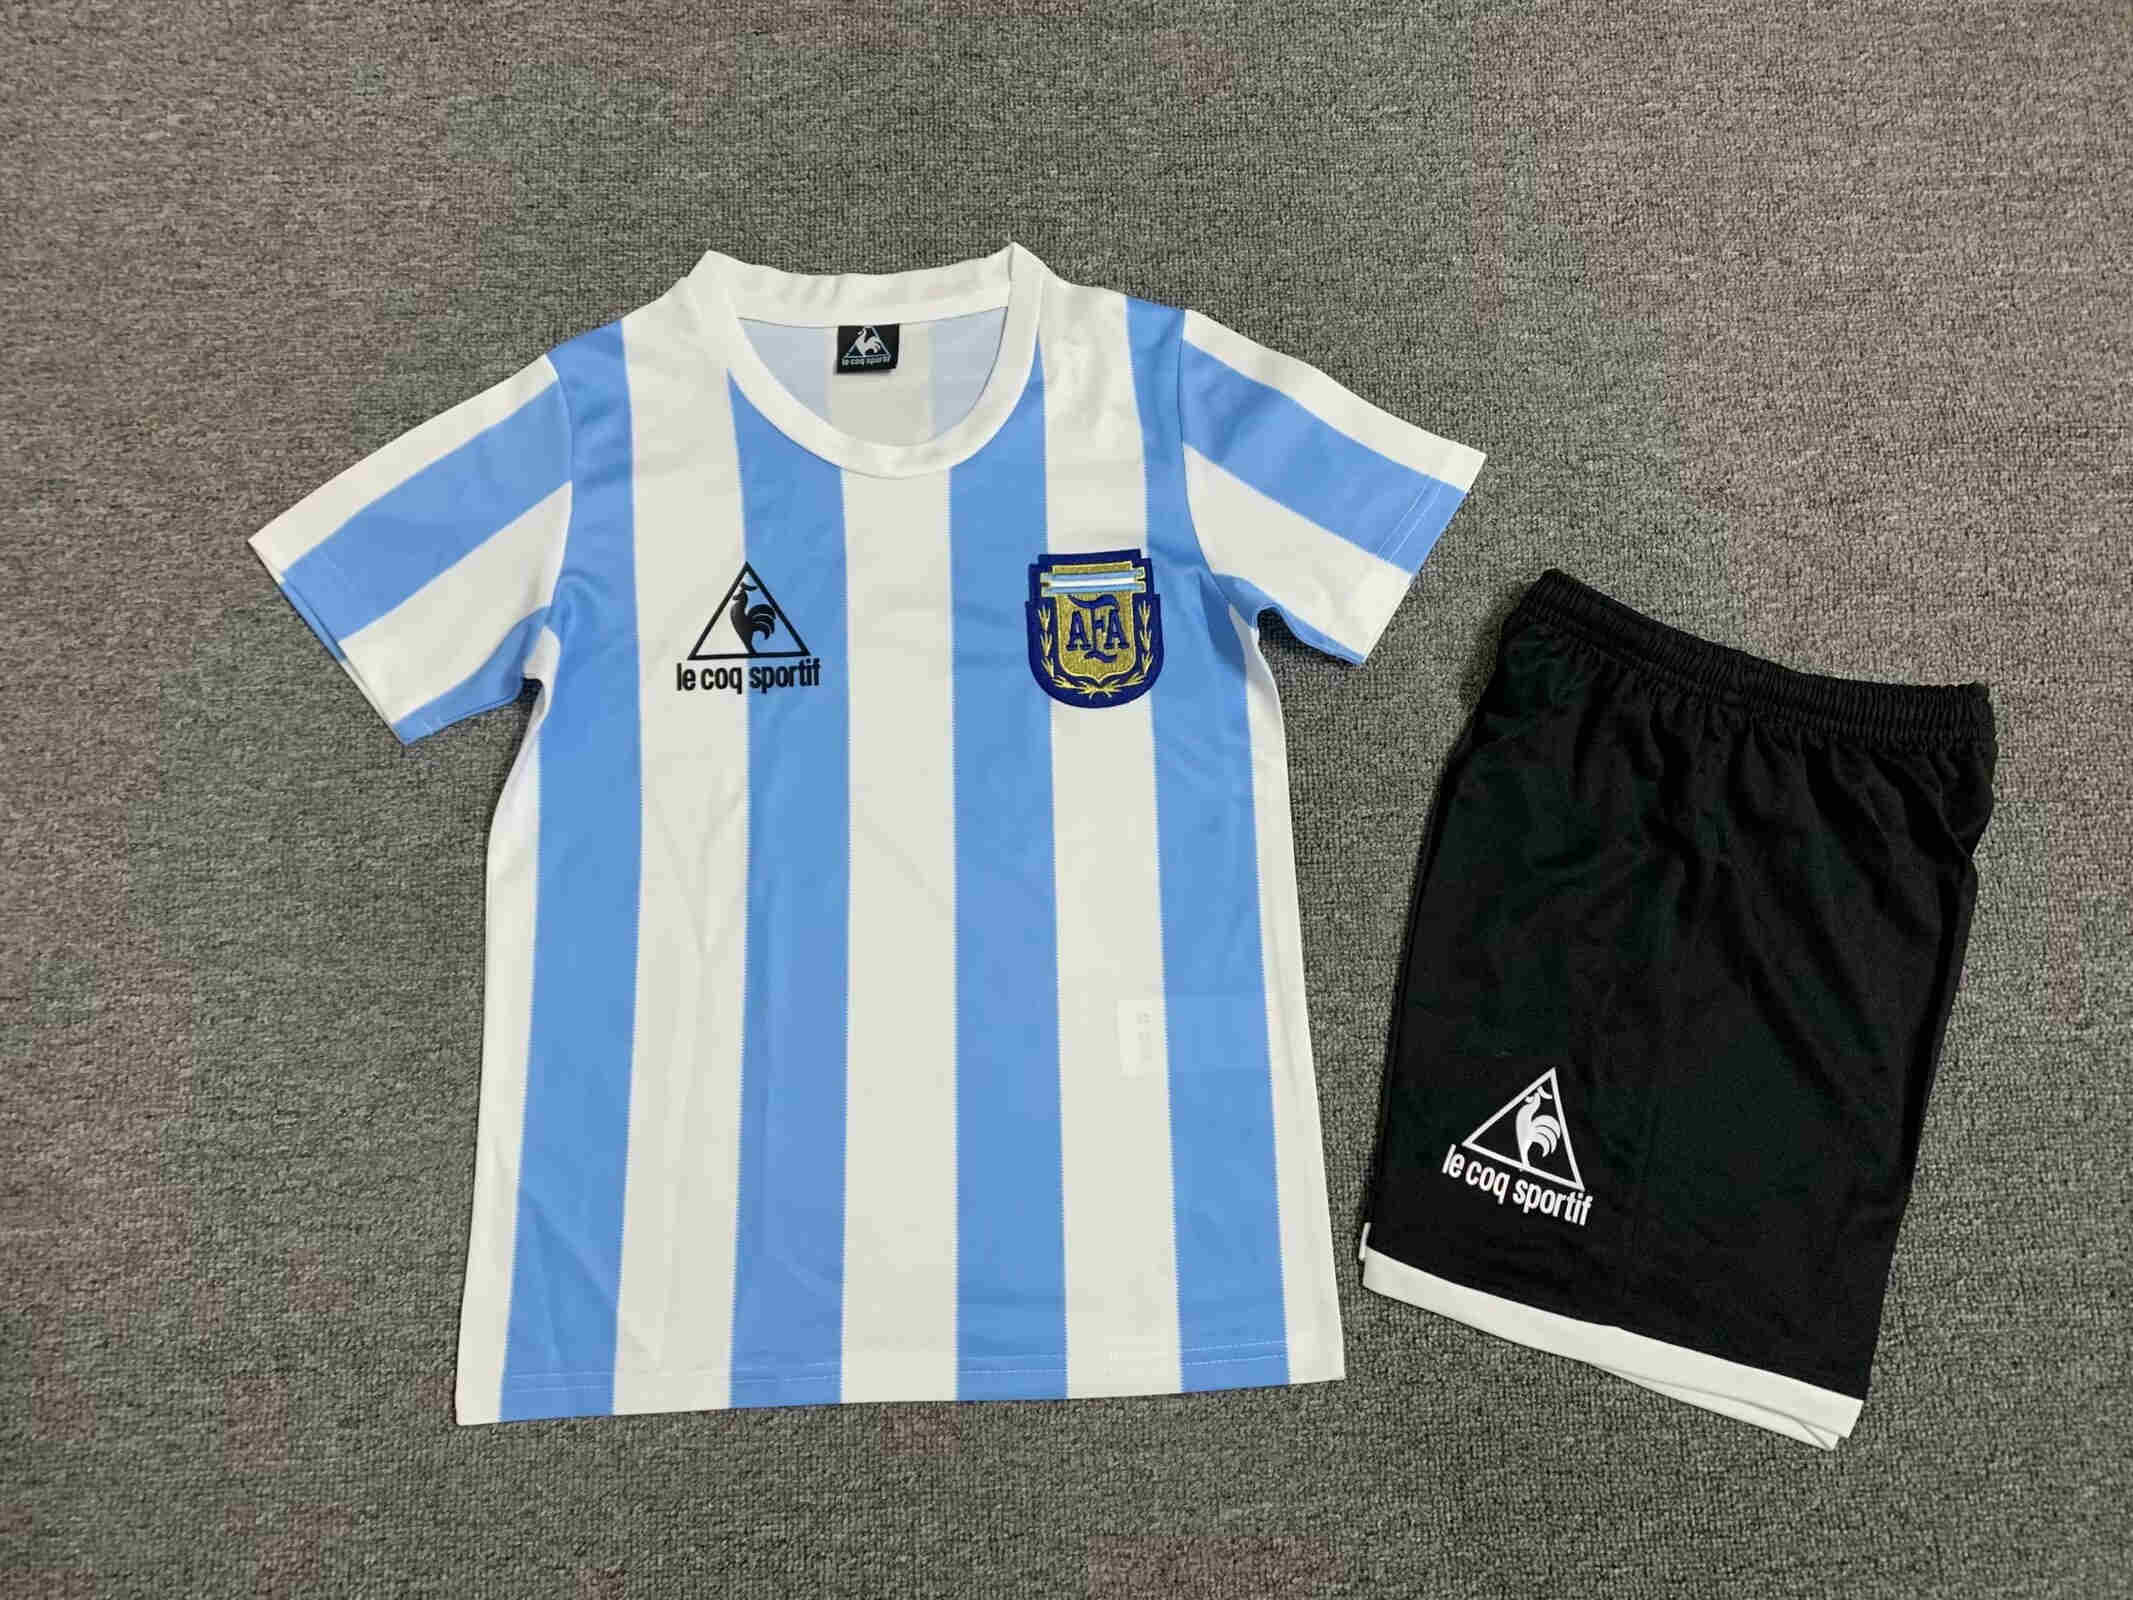 1986 Argentina   kids kit